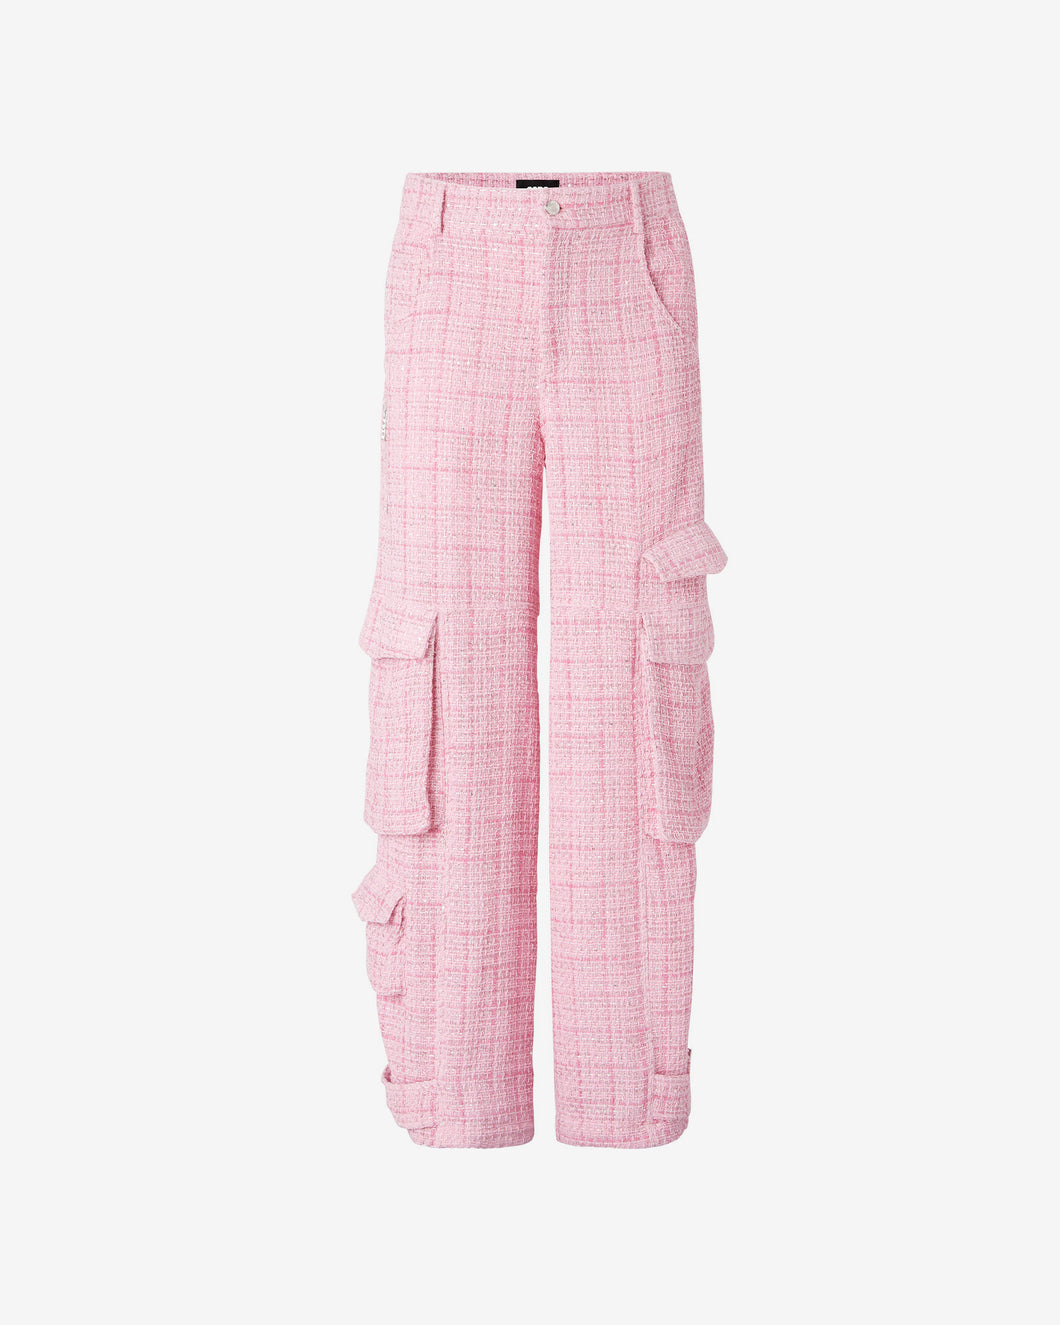 Ultracargo Tweed Trousers | Unisex Trousers Pink | GCDS®